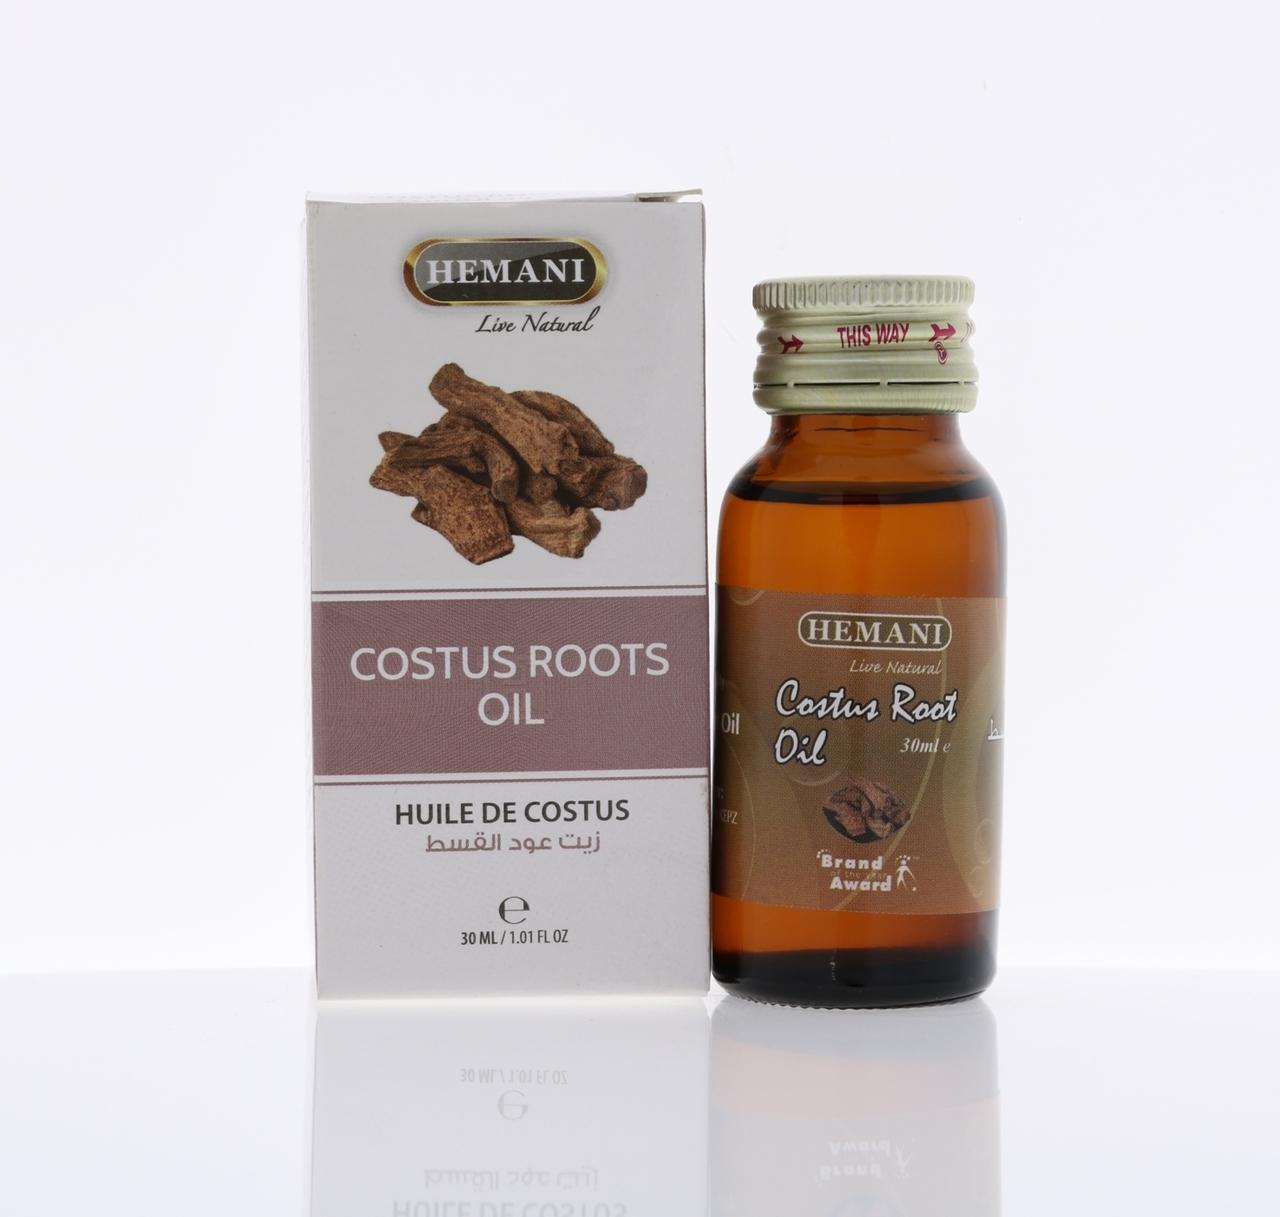 Hemani Costus Roots Oil